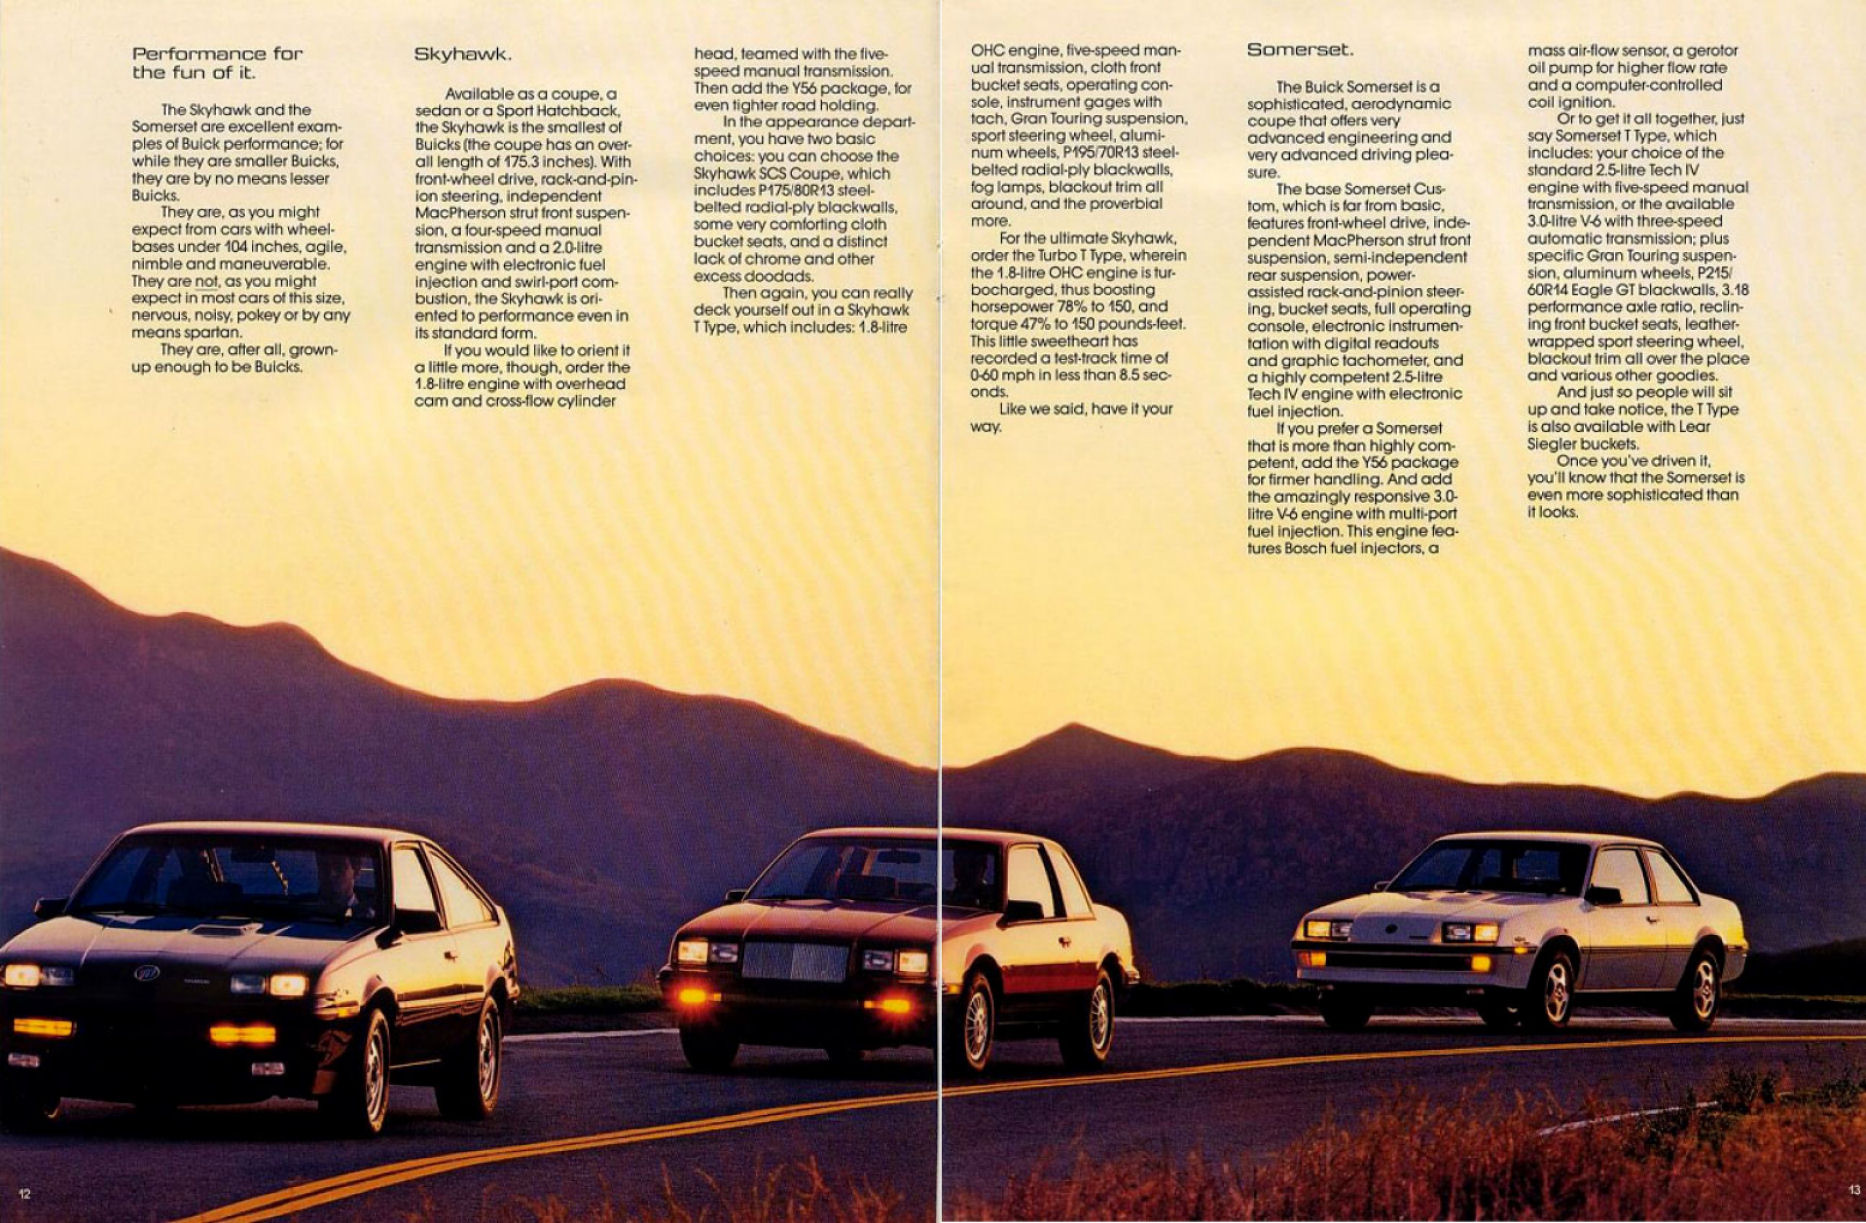 1986 Buick Performance-12-13